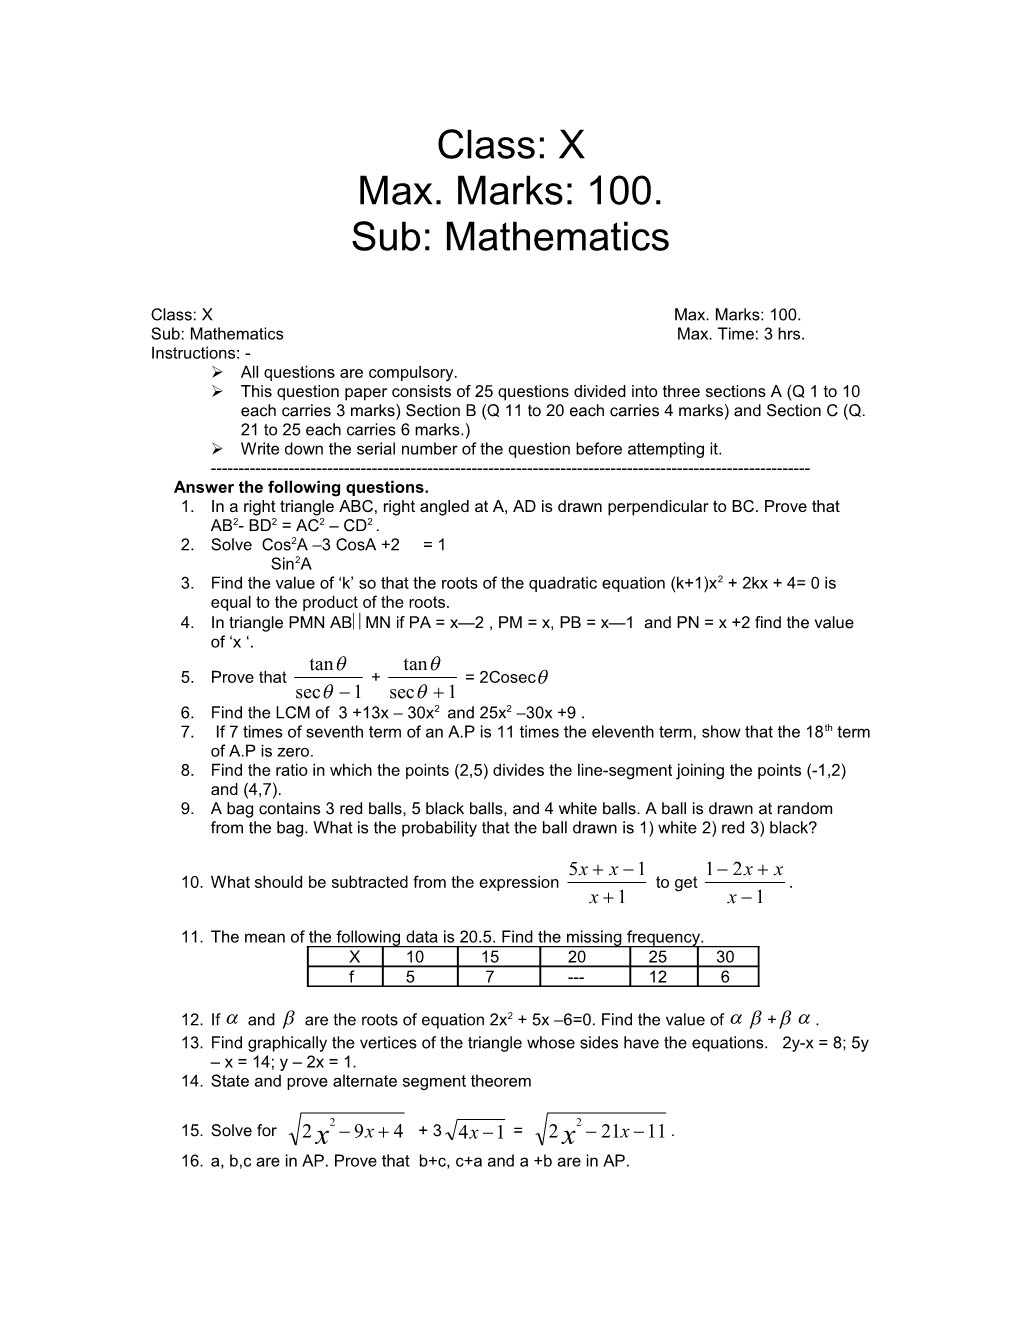 Sub: Mathematics Max. Time: 3 Hrs